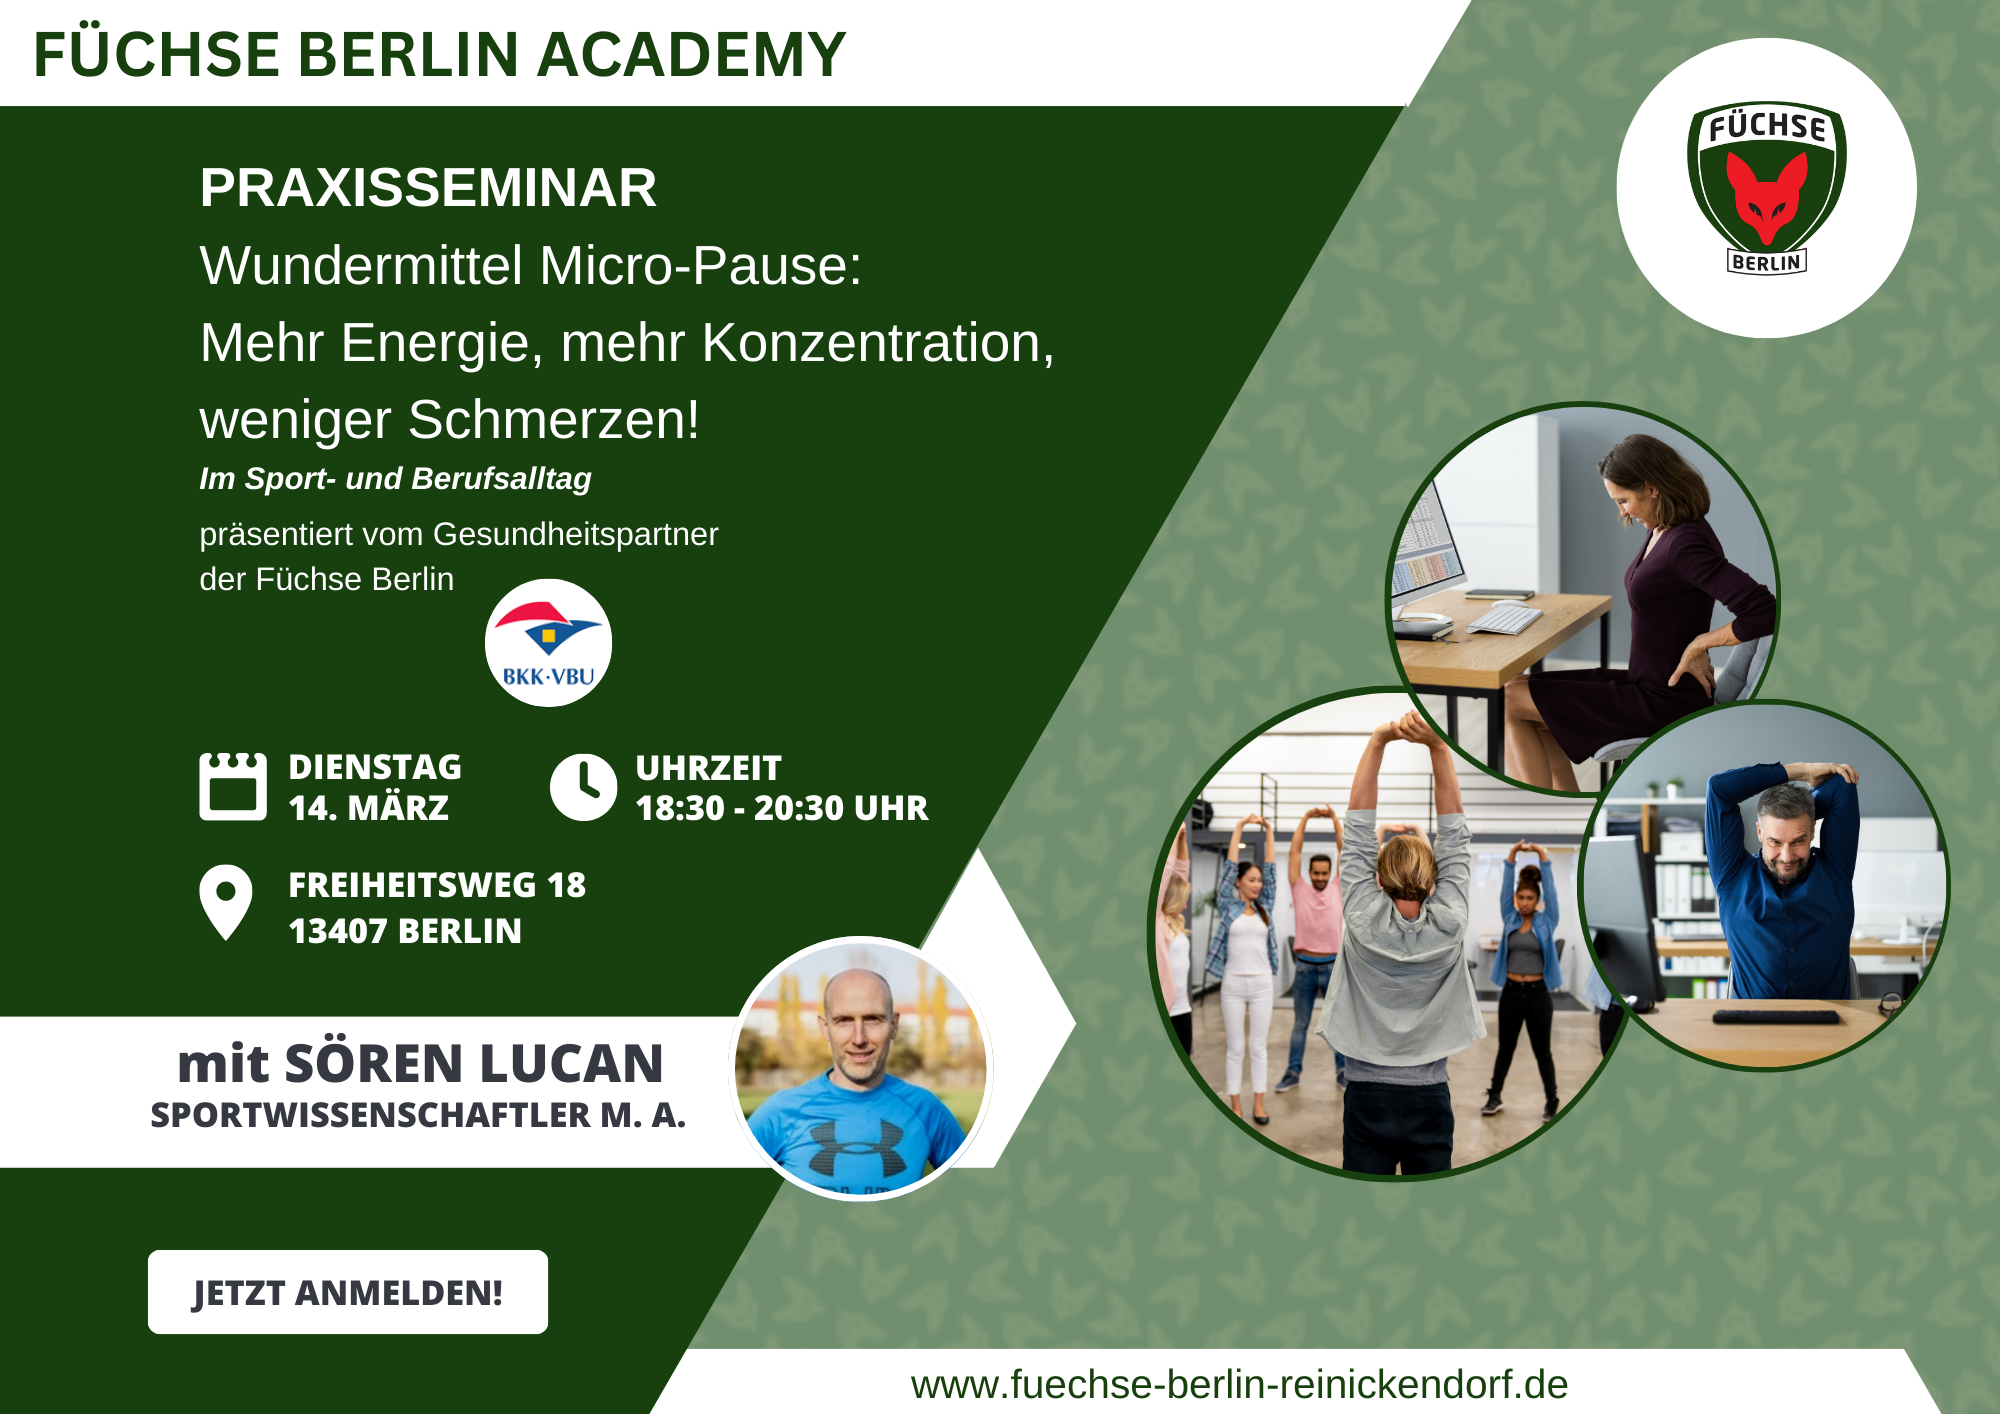 Füchse Berlin Academy